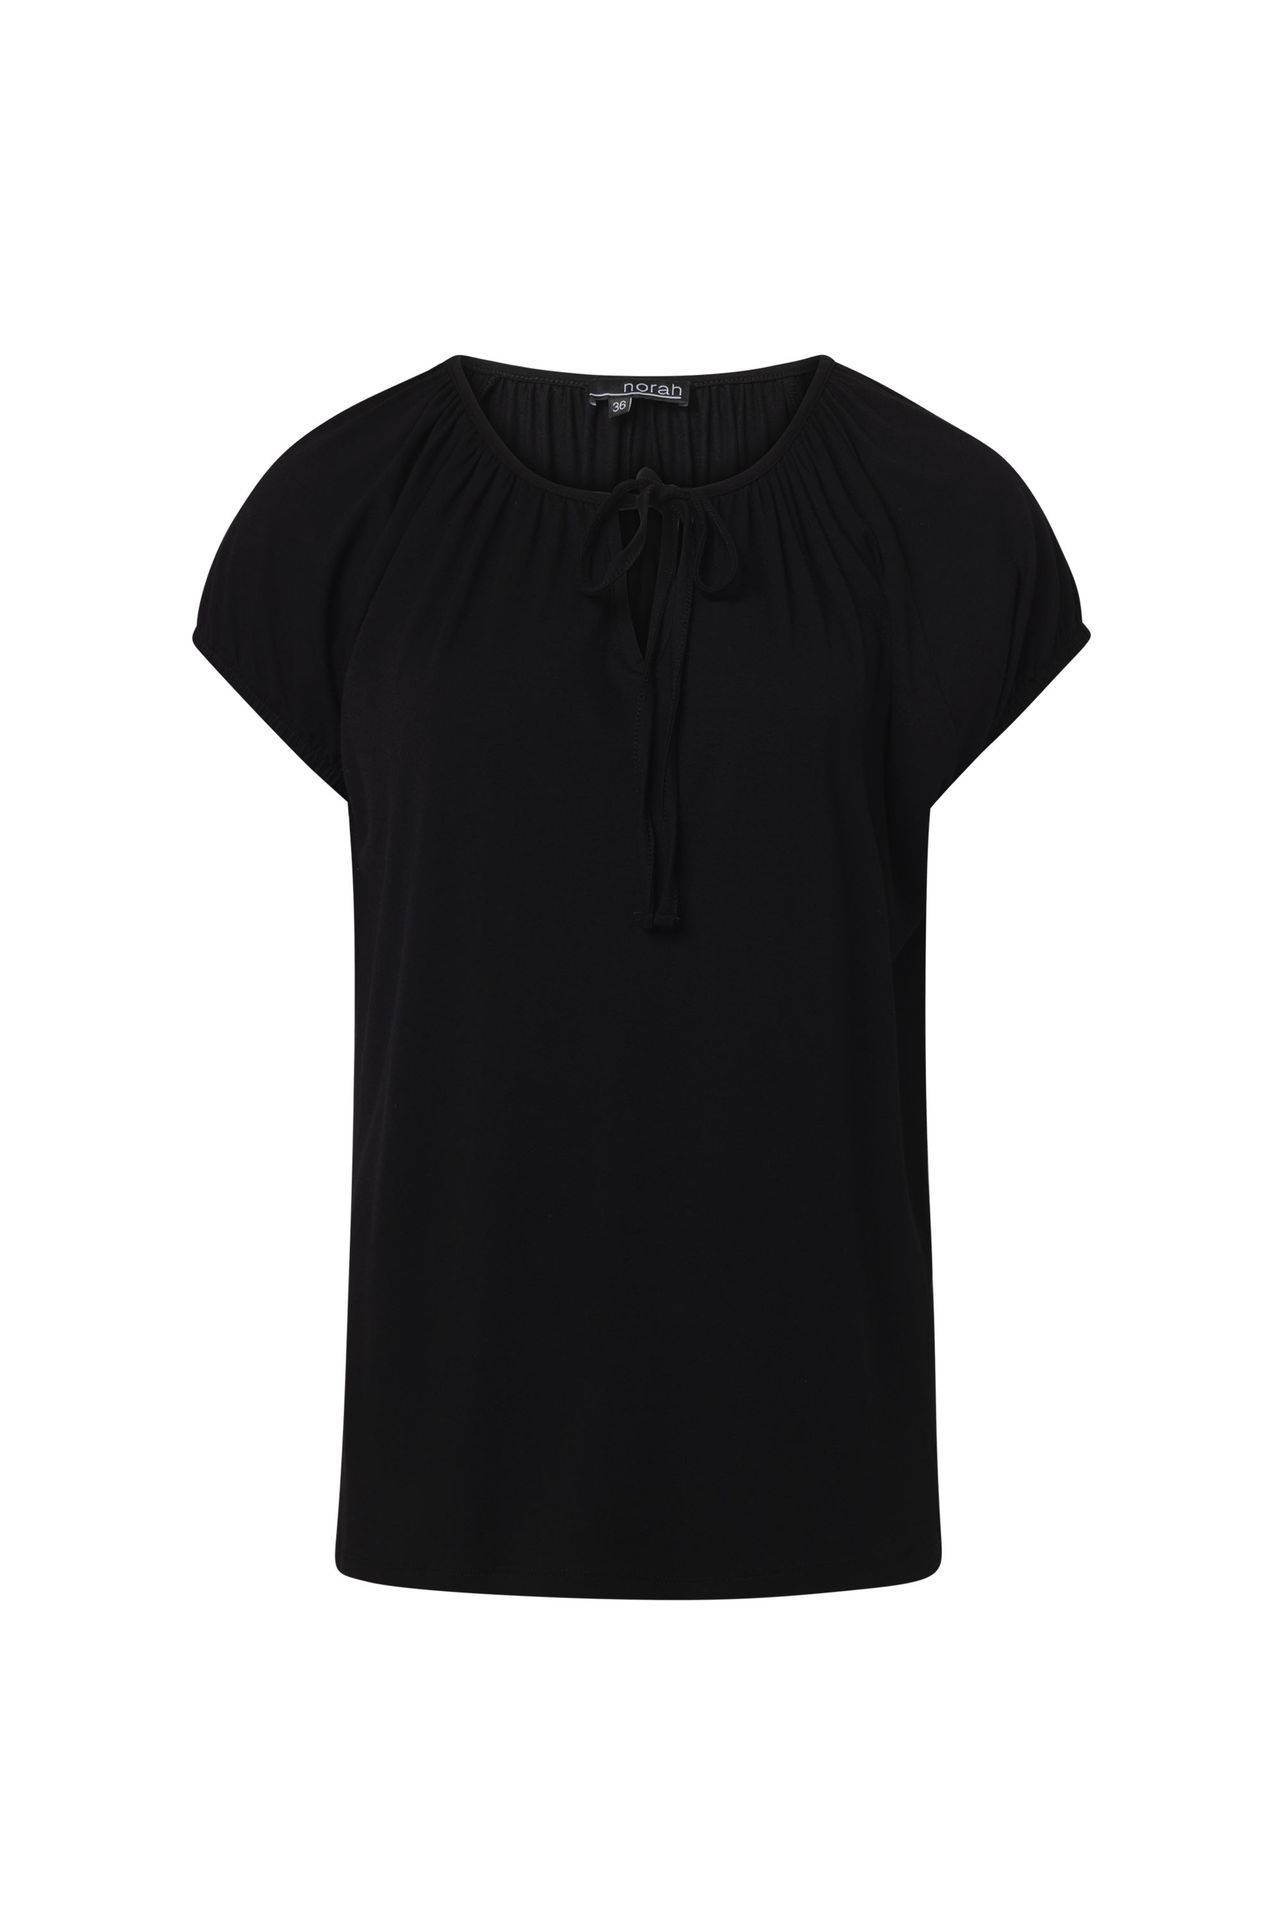 Norah Zwart shirt black 214751-001